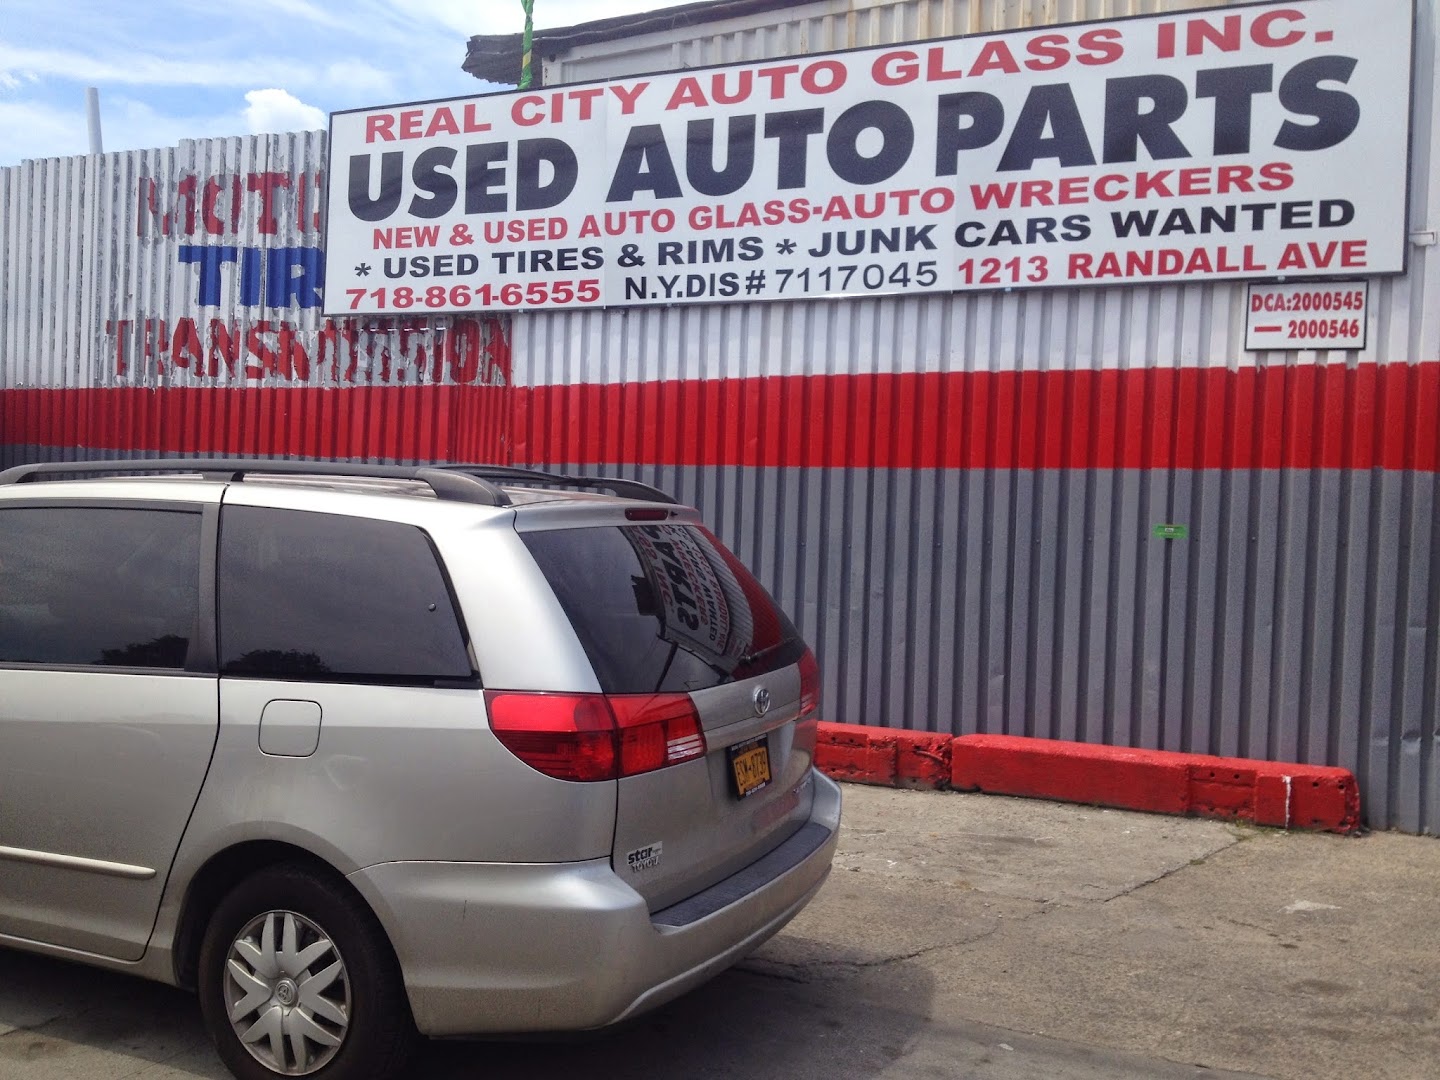 Used auto parts store In Bronx NY 